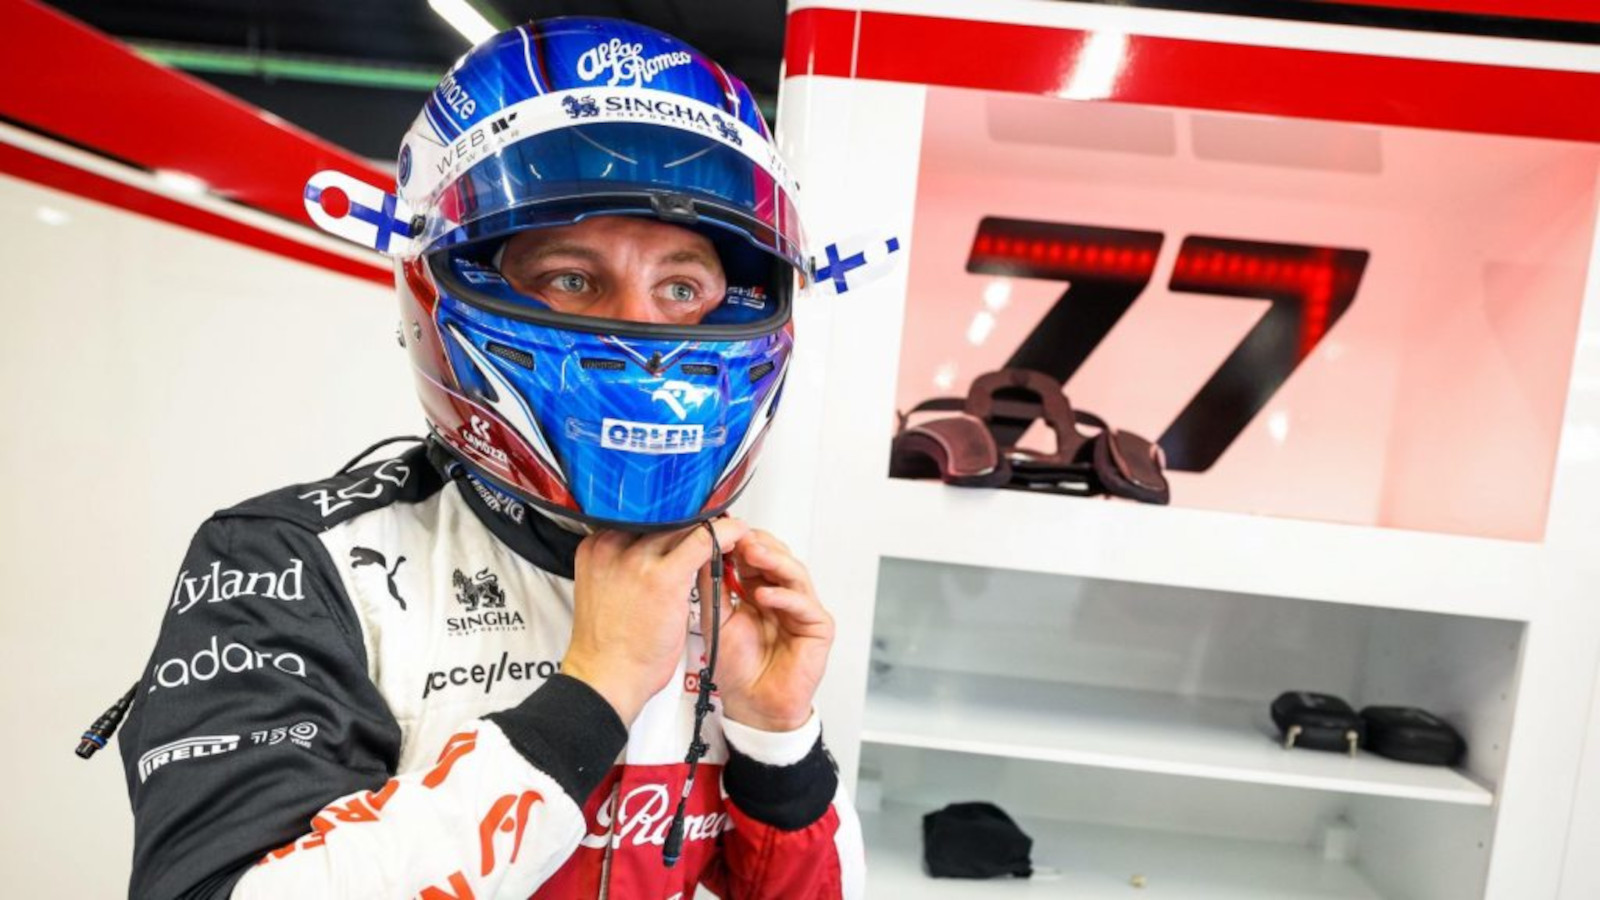 Valtteri Bottas tightening his helmet in the garage, 77. Spain May 2022